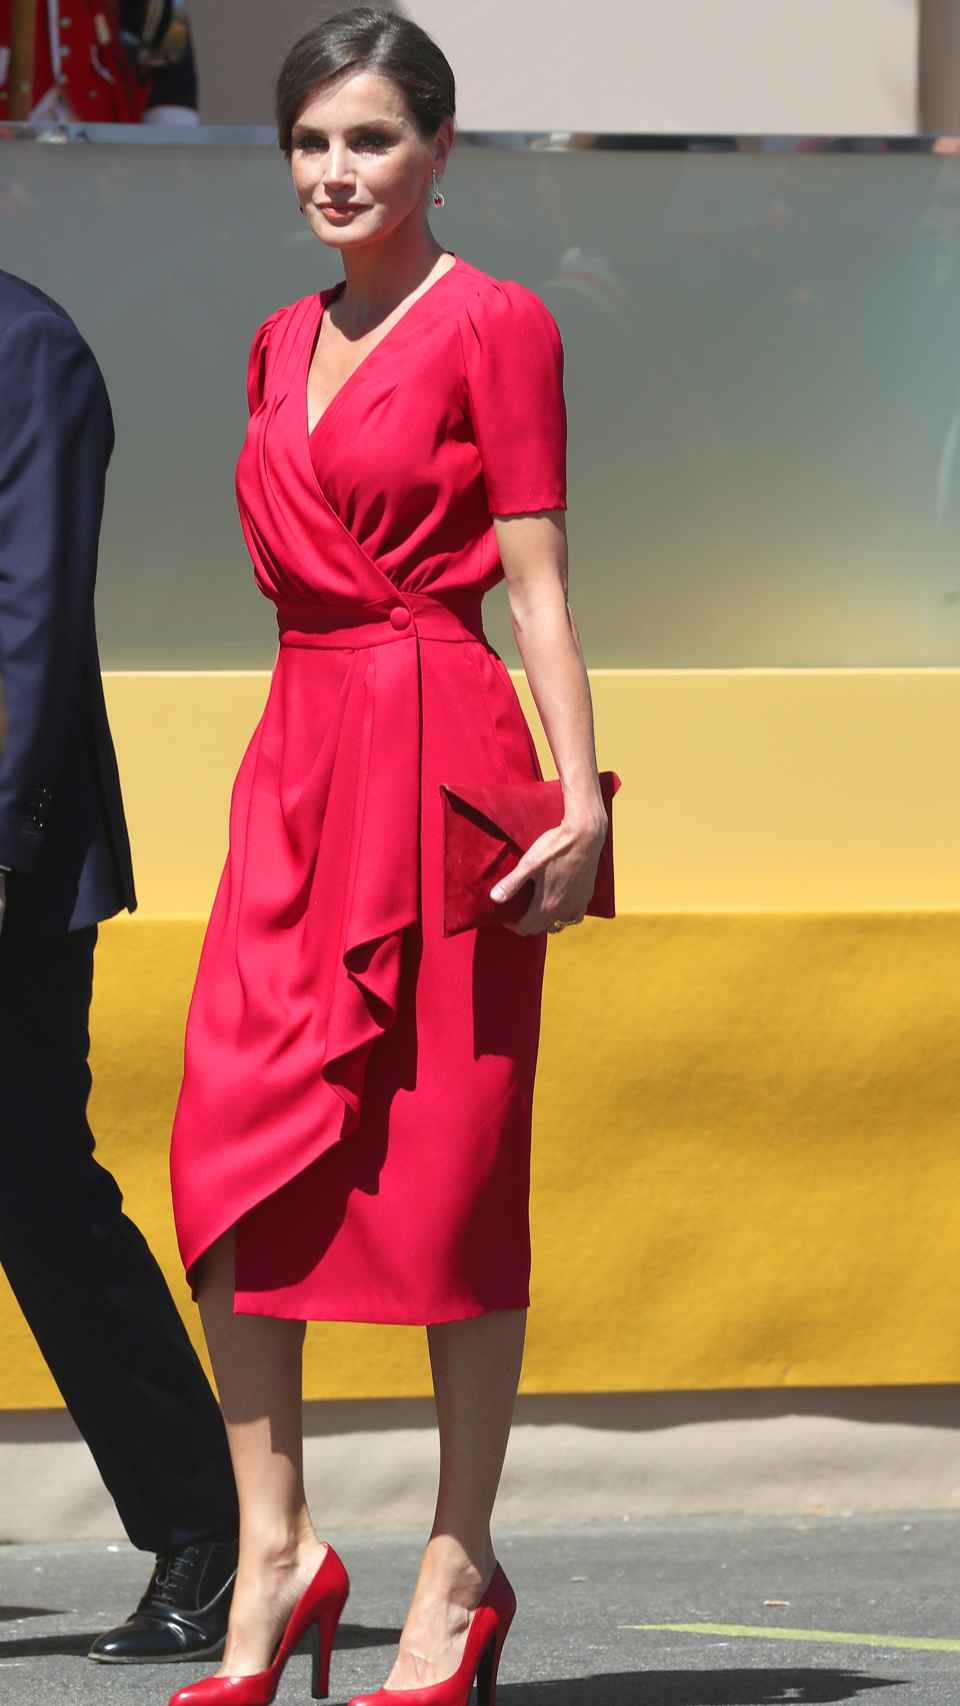 El vestido rojo de la reina Letizia tiene multitud de detalles.